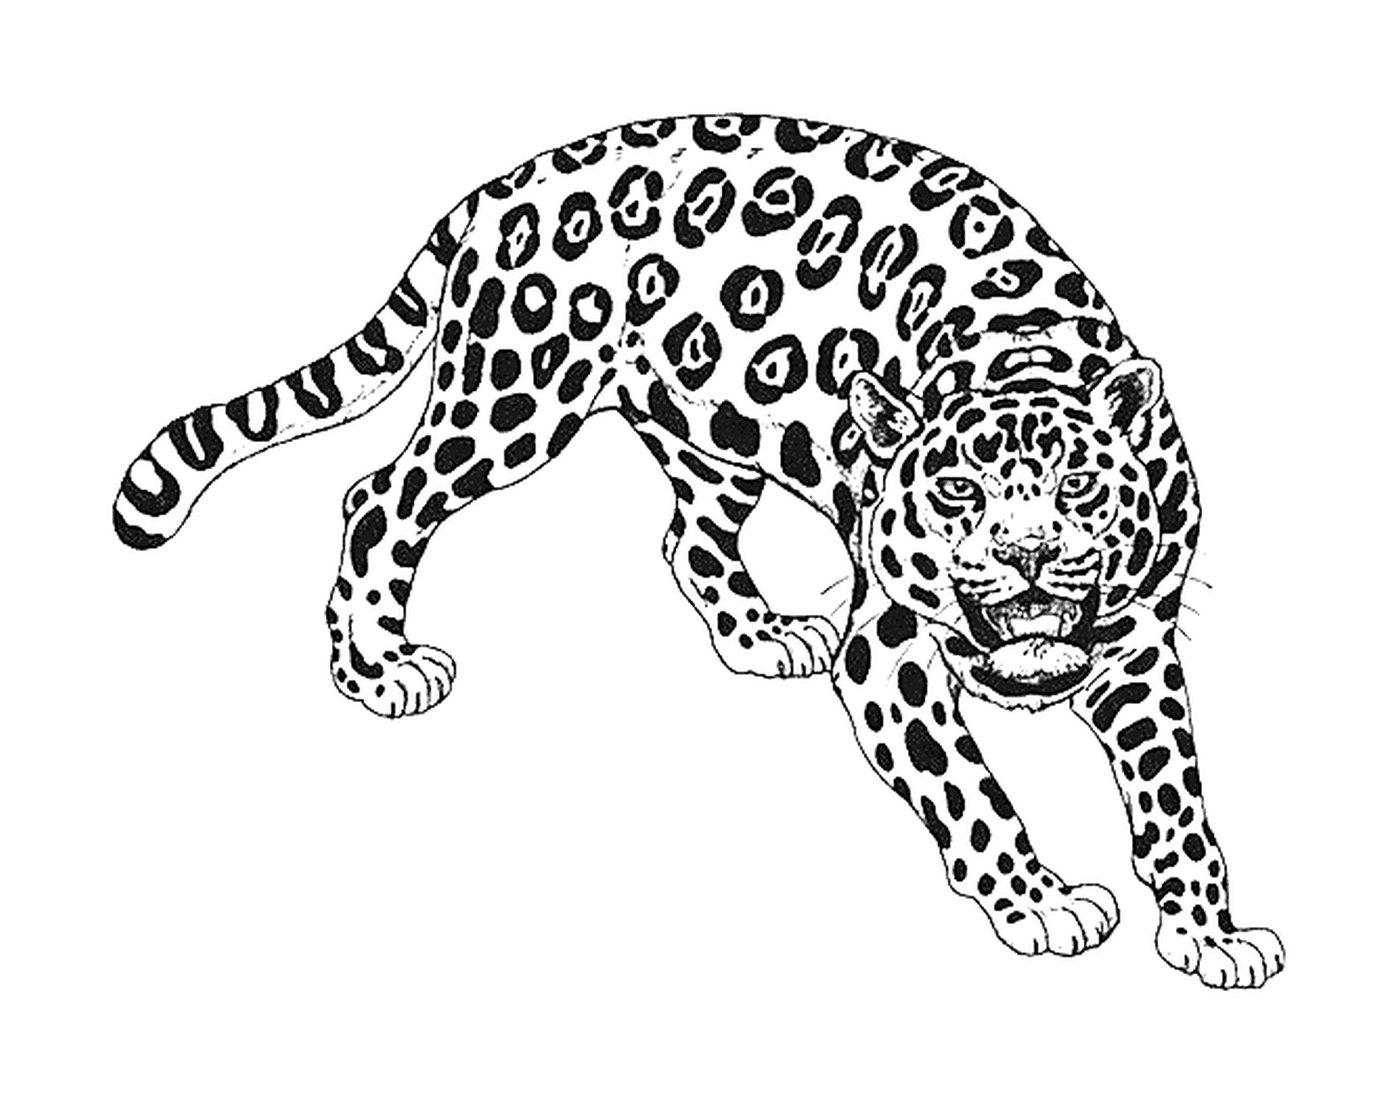  A leopard 